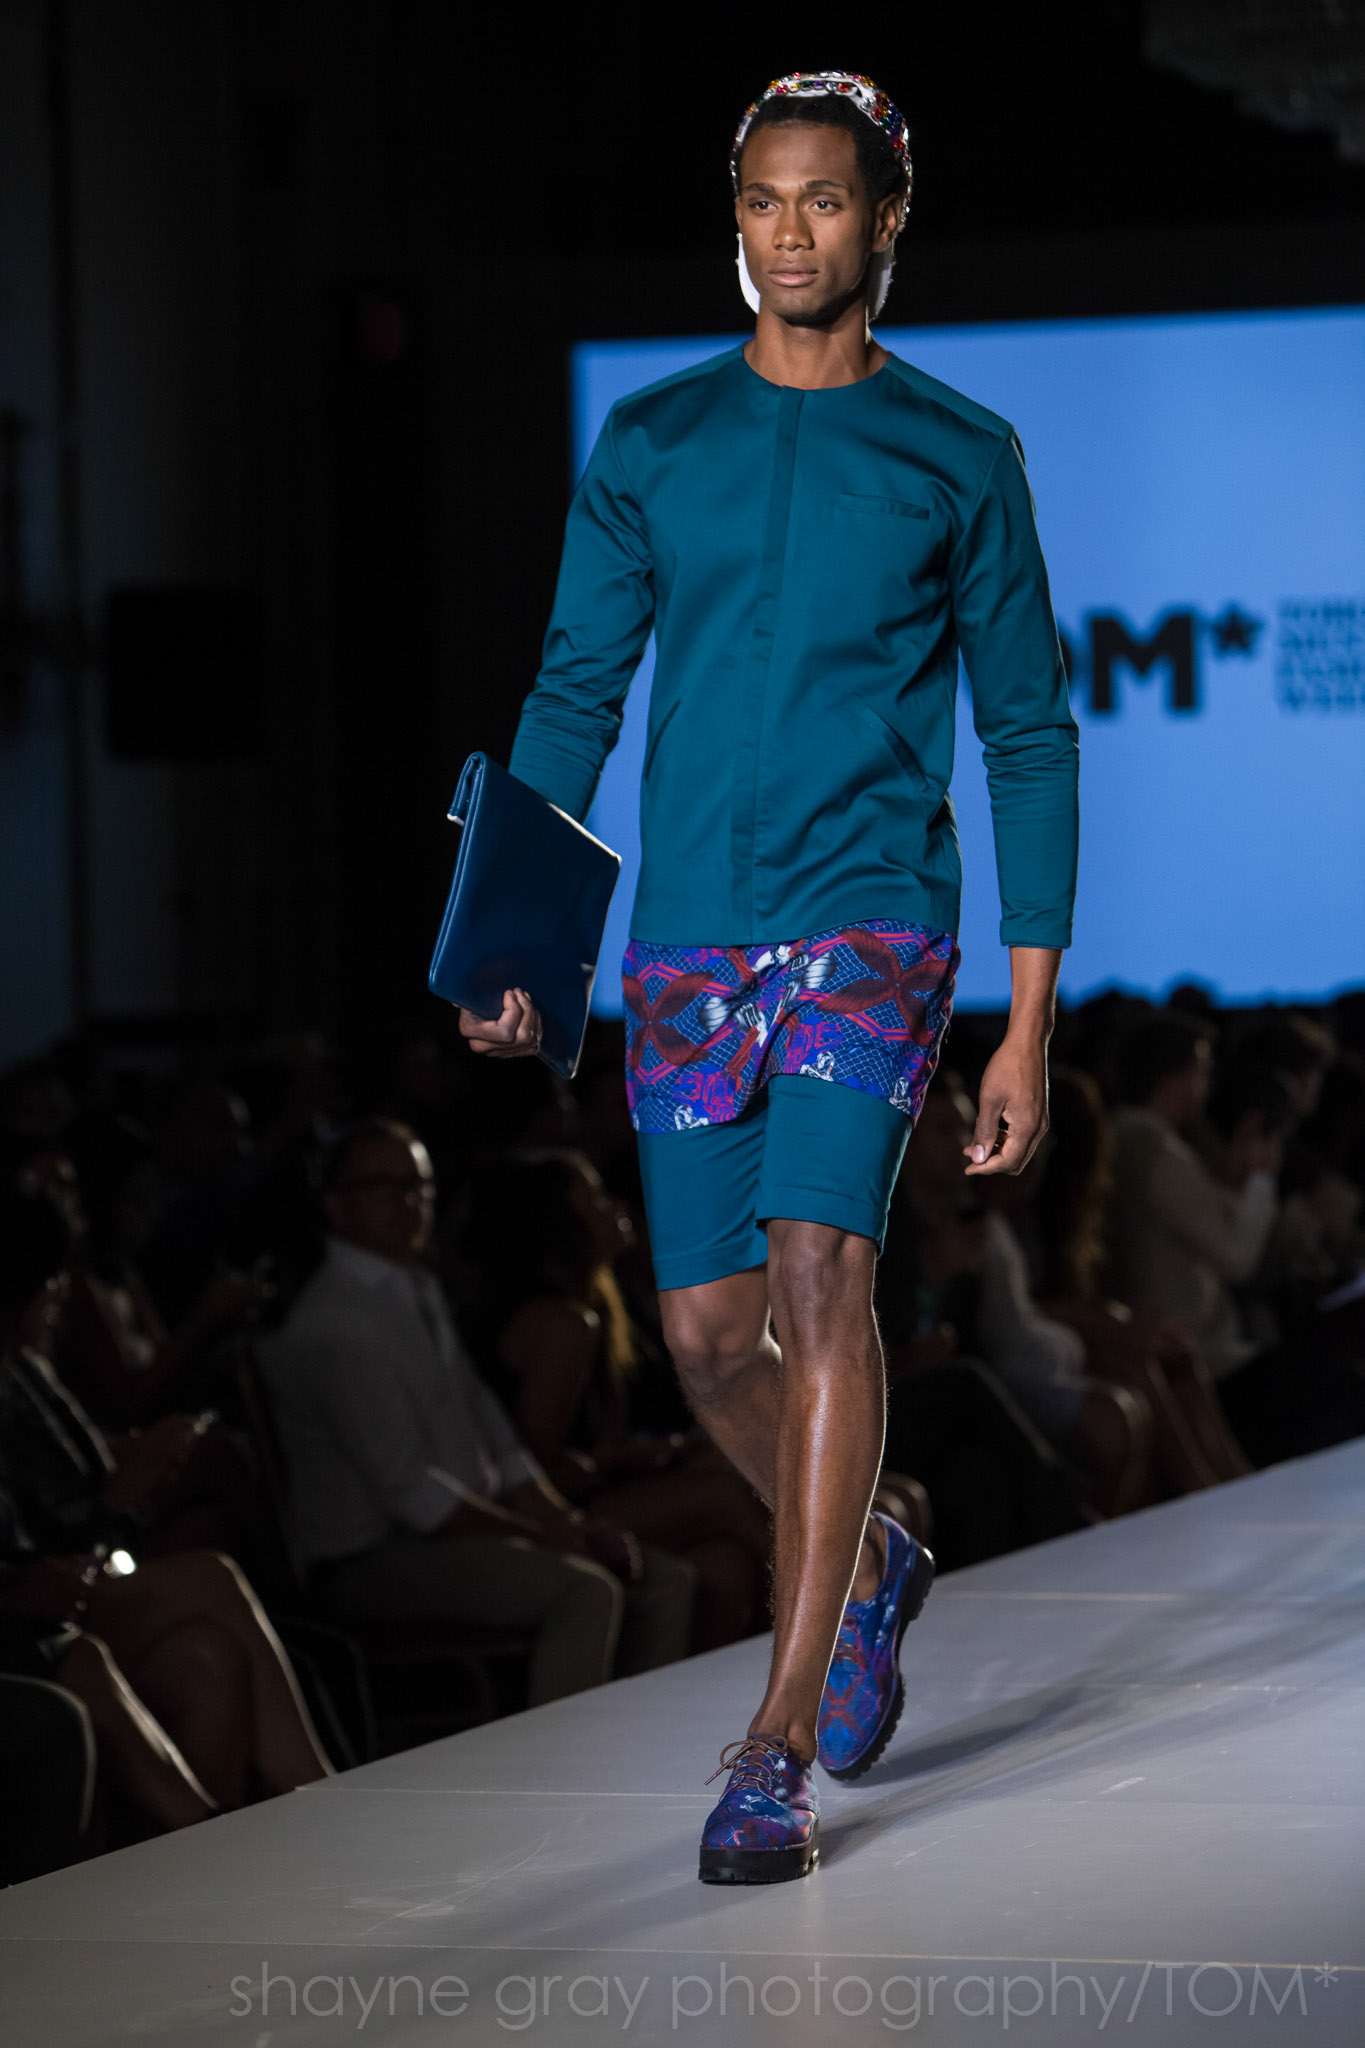 Shayne-Gray-Toronto-men's-fashion_week-TOM-paul-nathaphol-7970.jpg